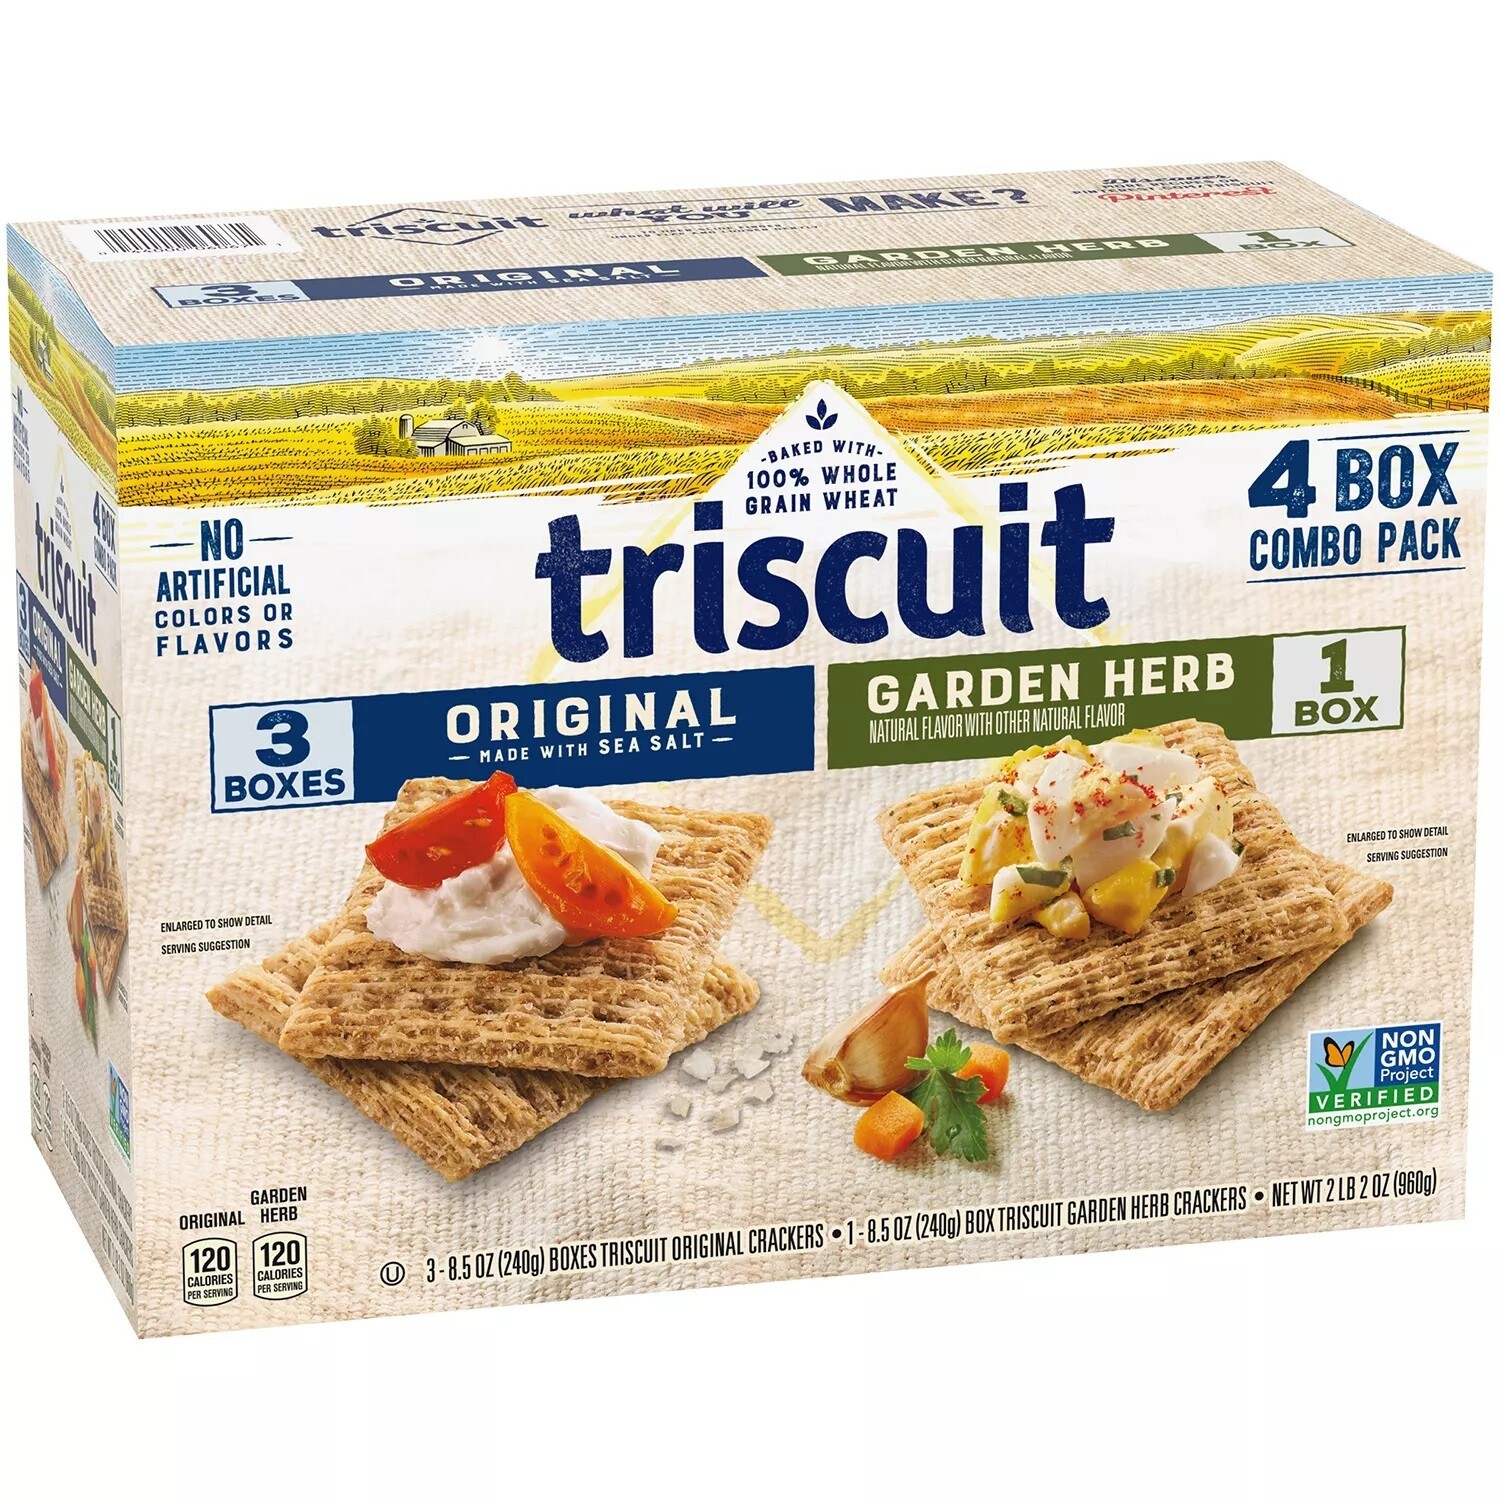 Triscuit Club Pack (4 boxes – 3 original, 1 garden herb)